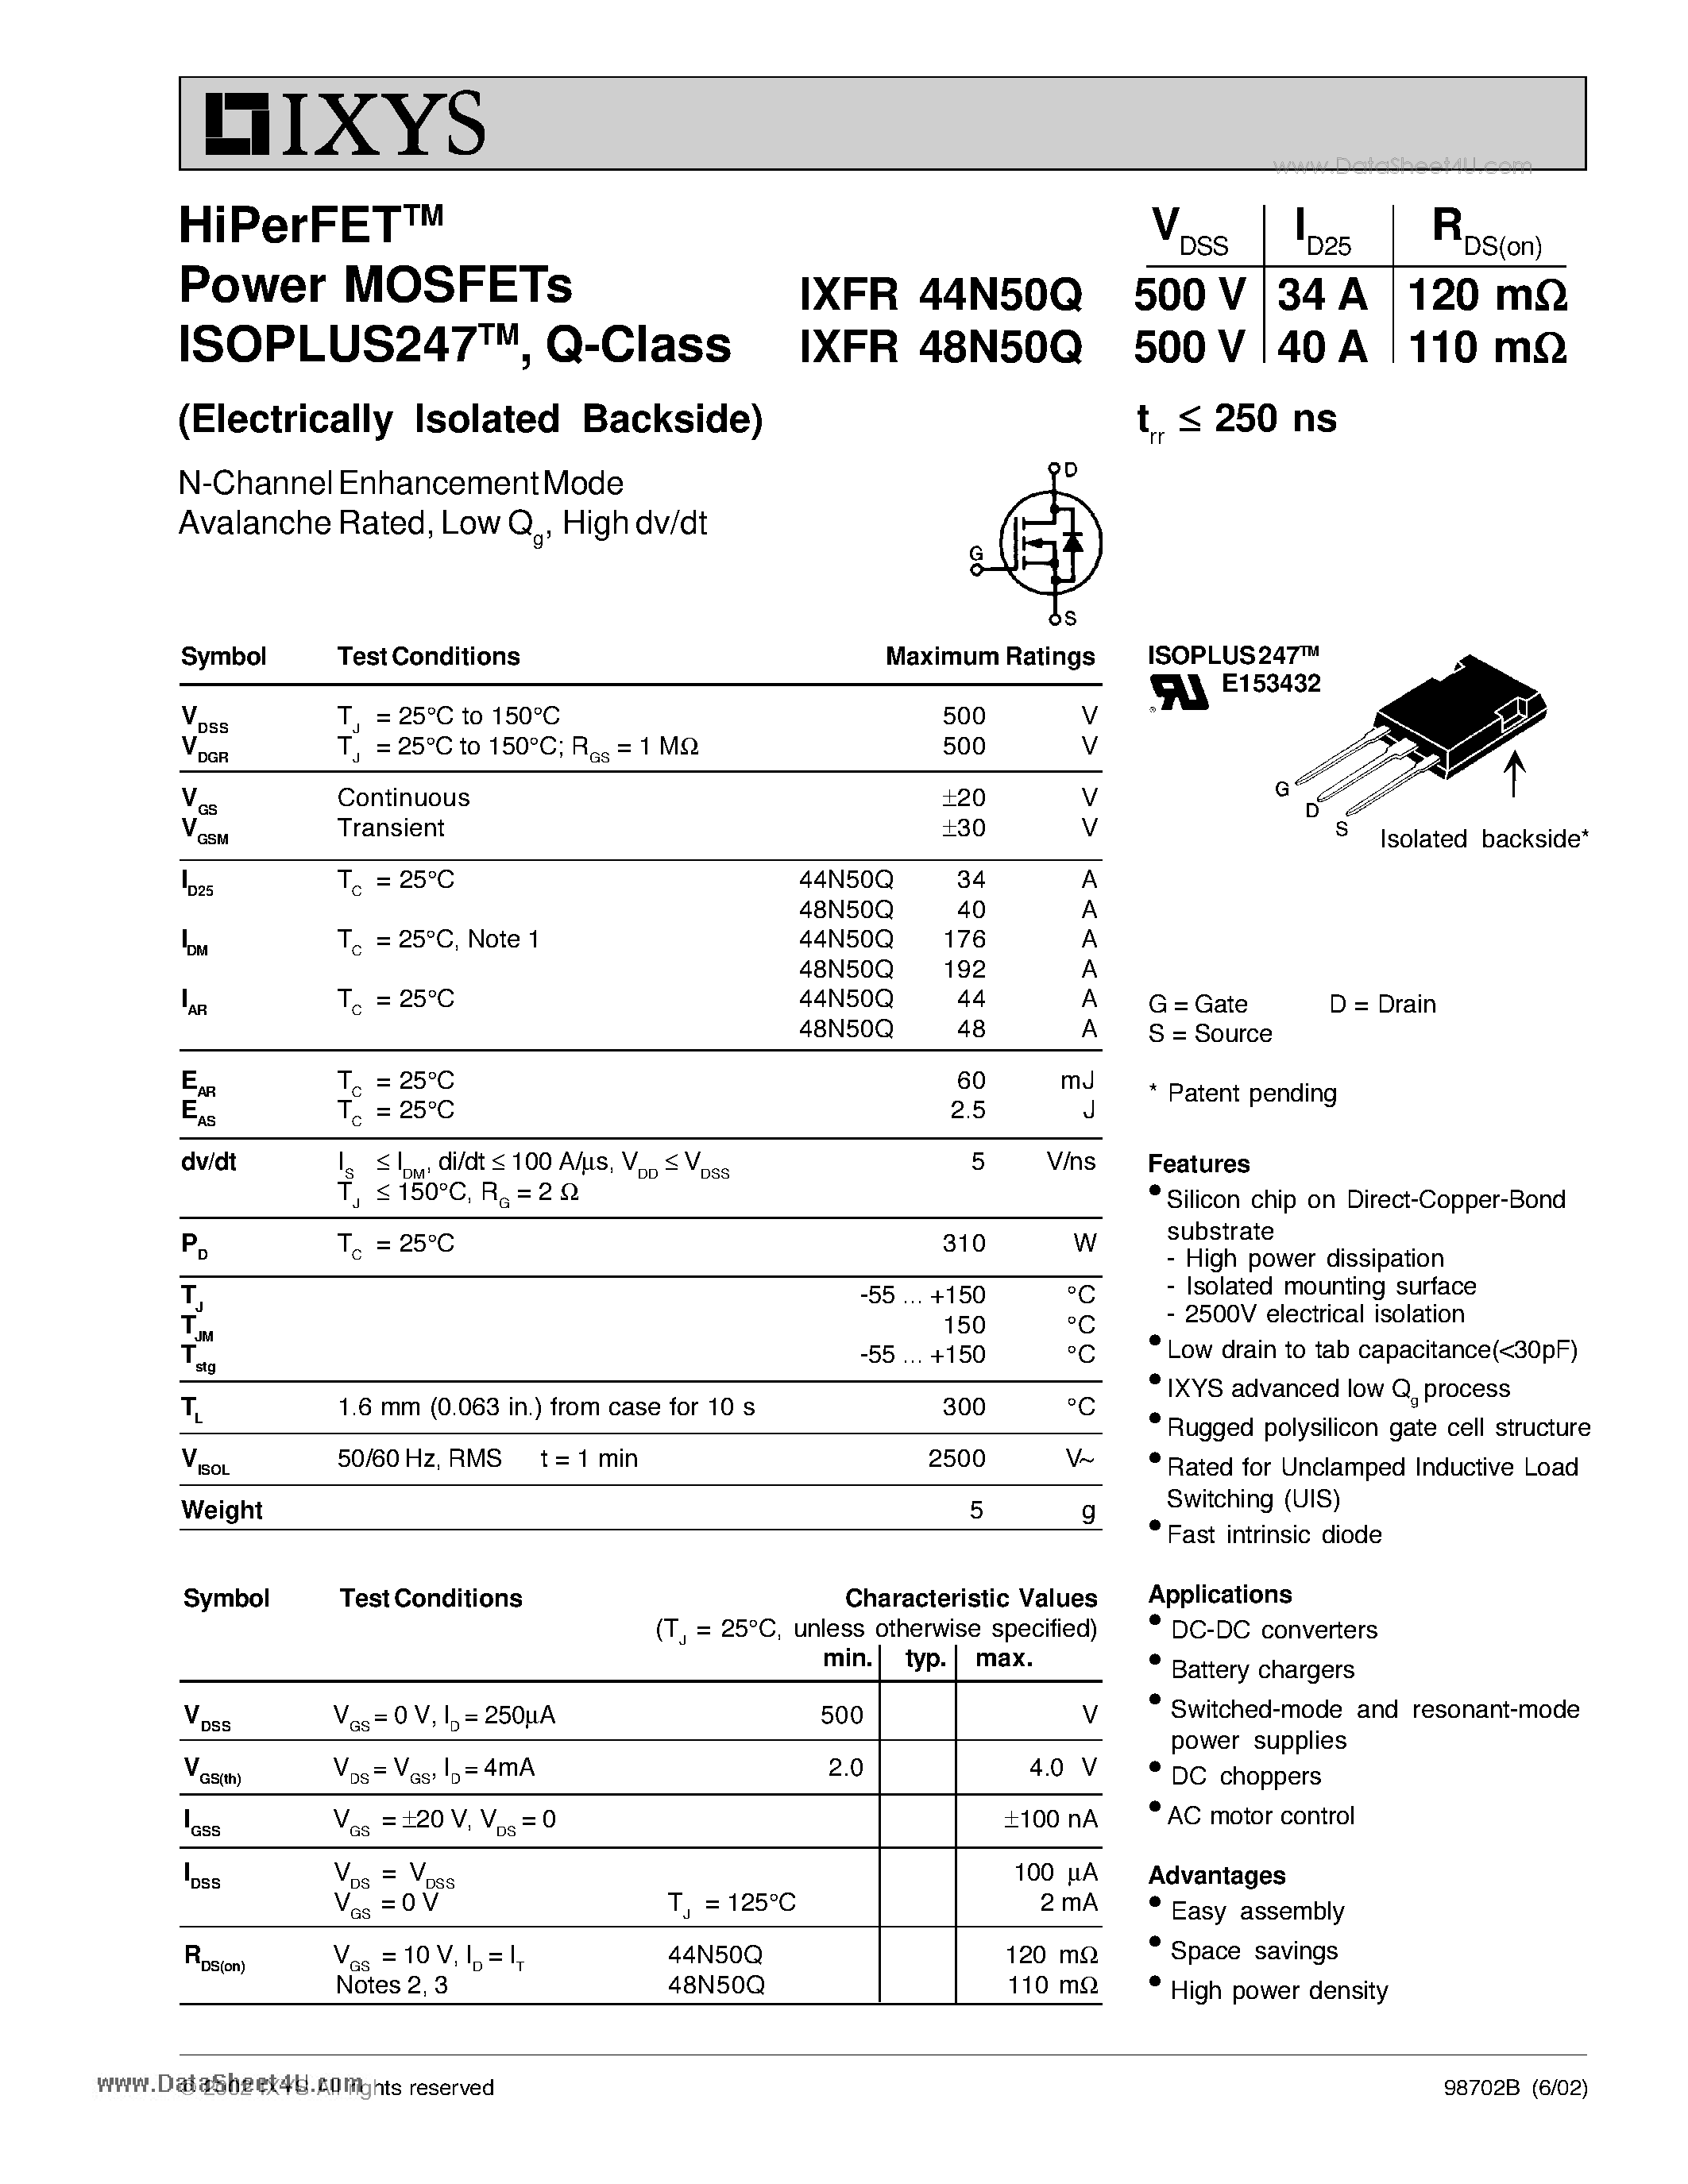 Datasheet IXFR44N50Q - HiPerFET Power MOSFETs ISOPLUS247 Q-Class page 1